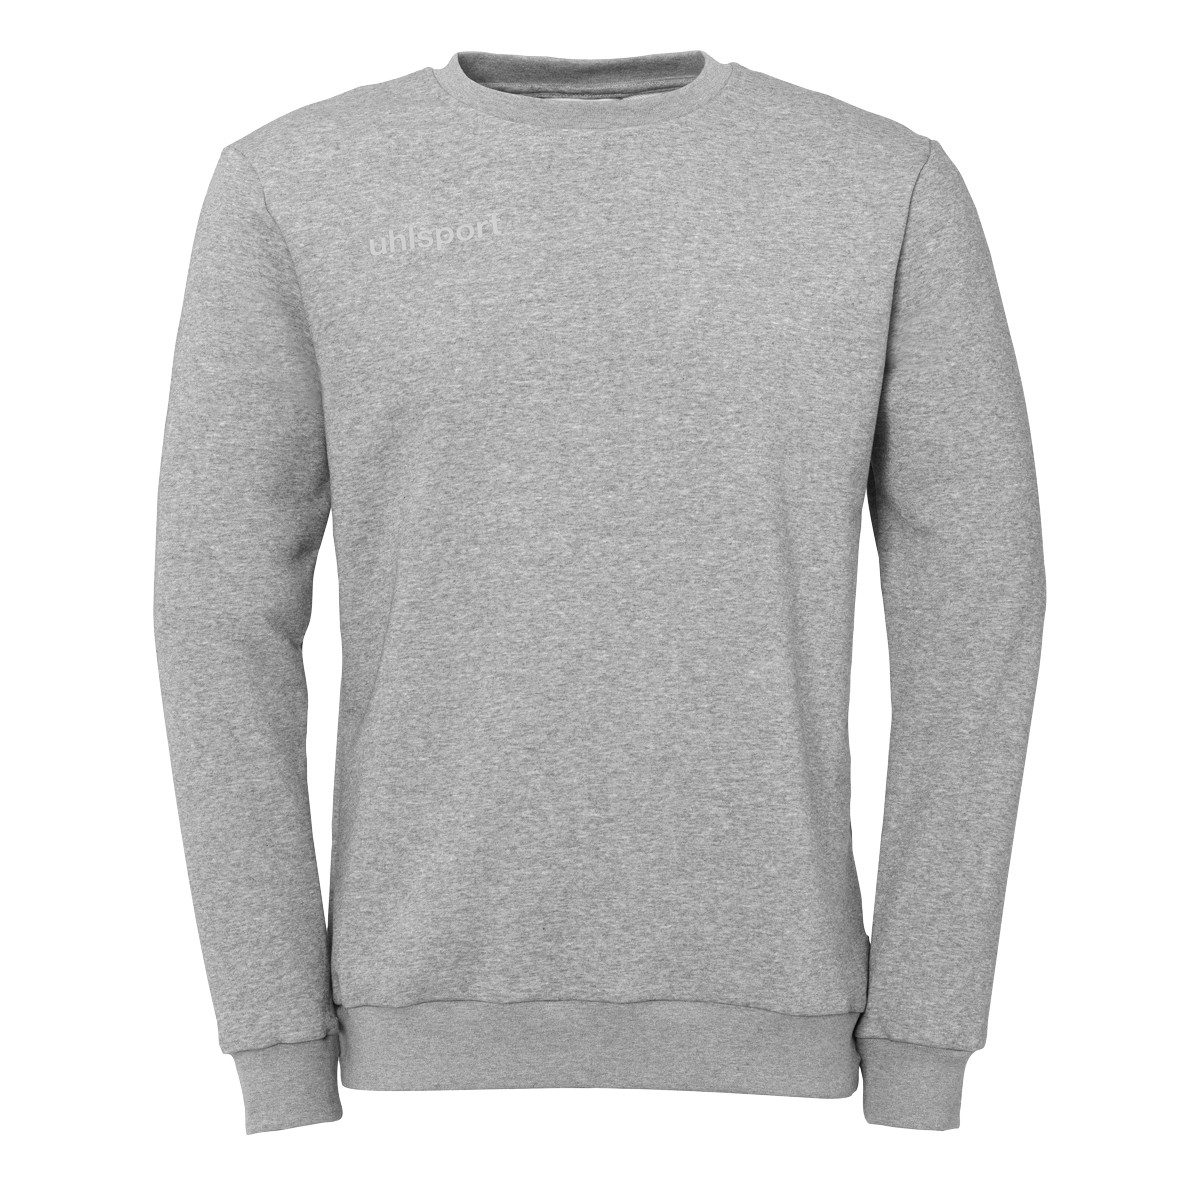 uhlsport Sweater Sweatshirt Sweatshirt